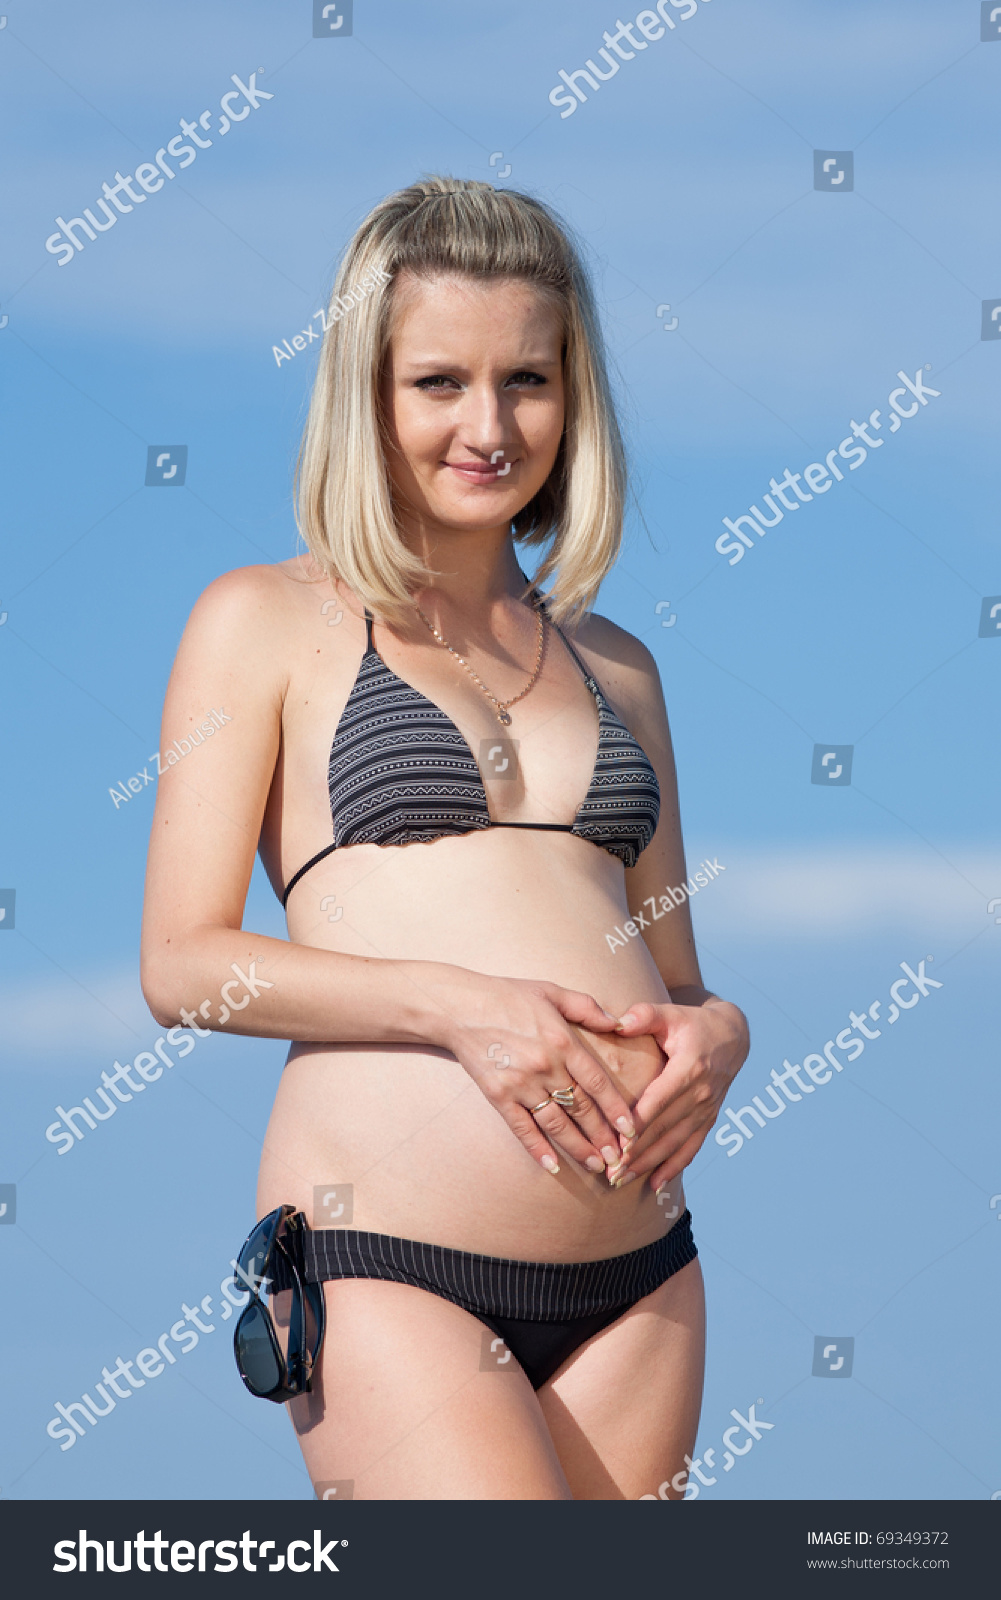 cheri jenkins share pregnant teen in bikini photos